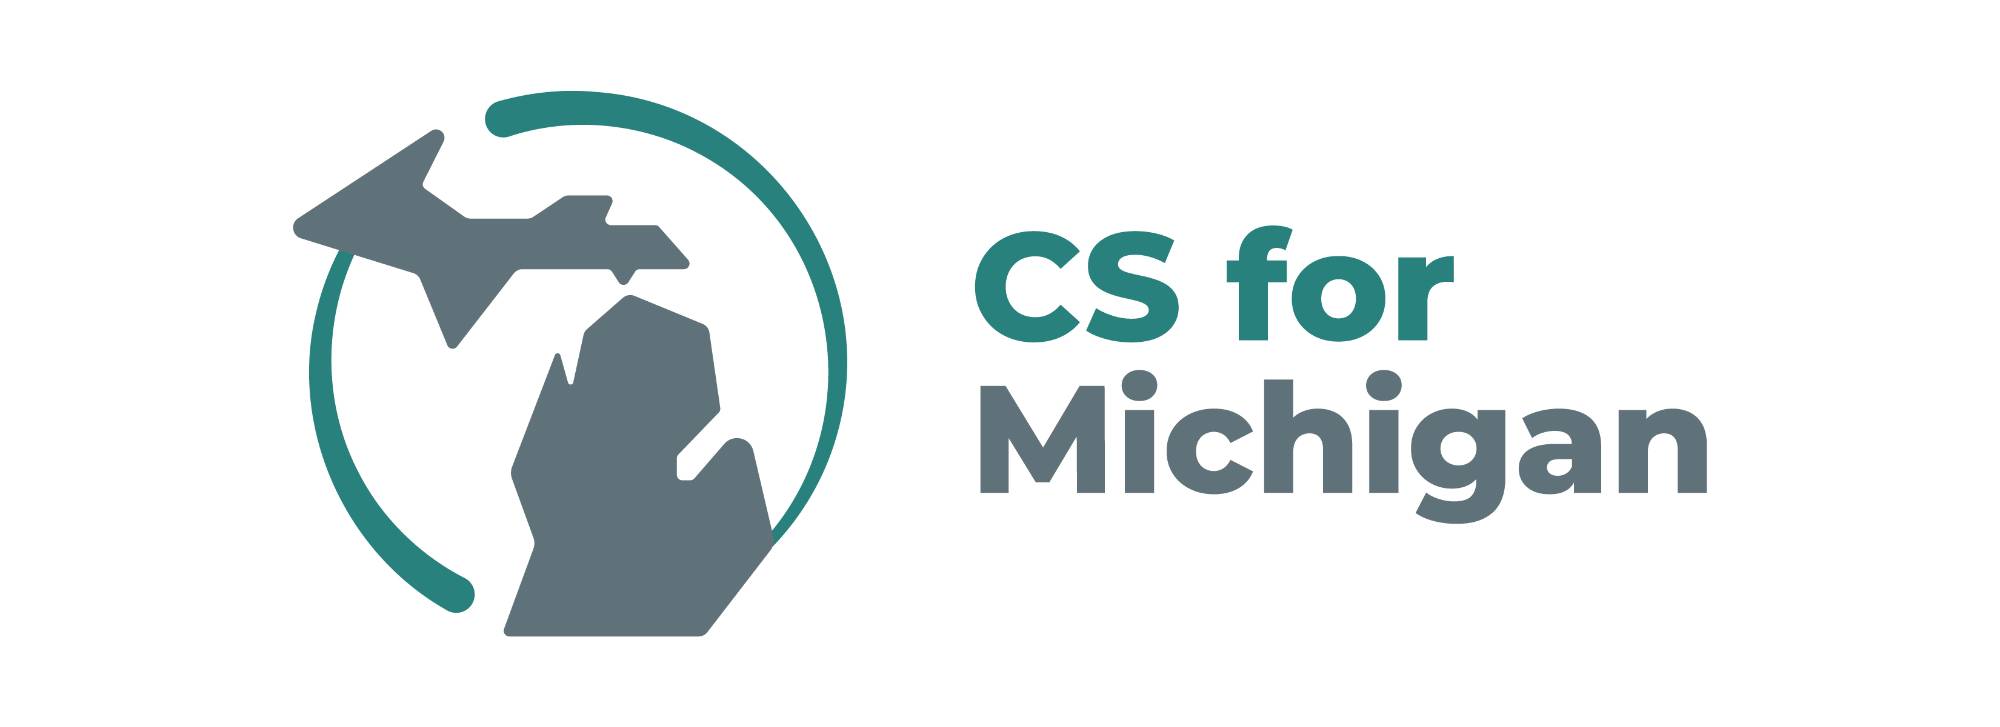 CS for Michigan Collaborative logo